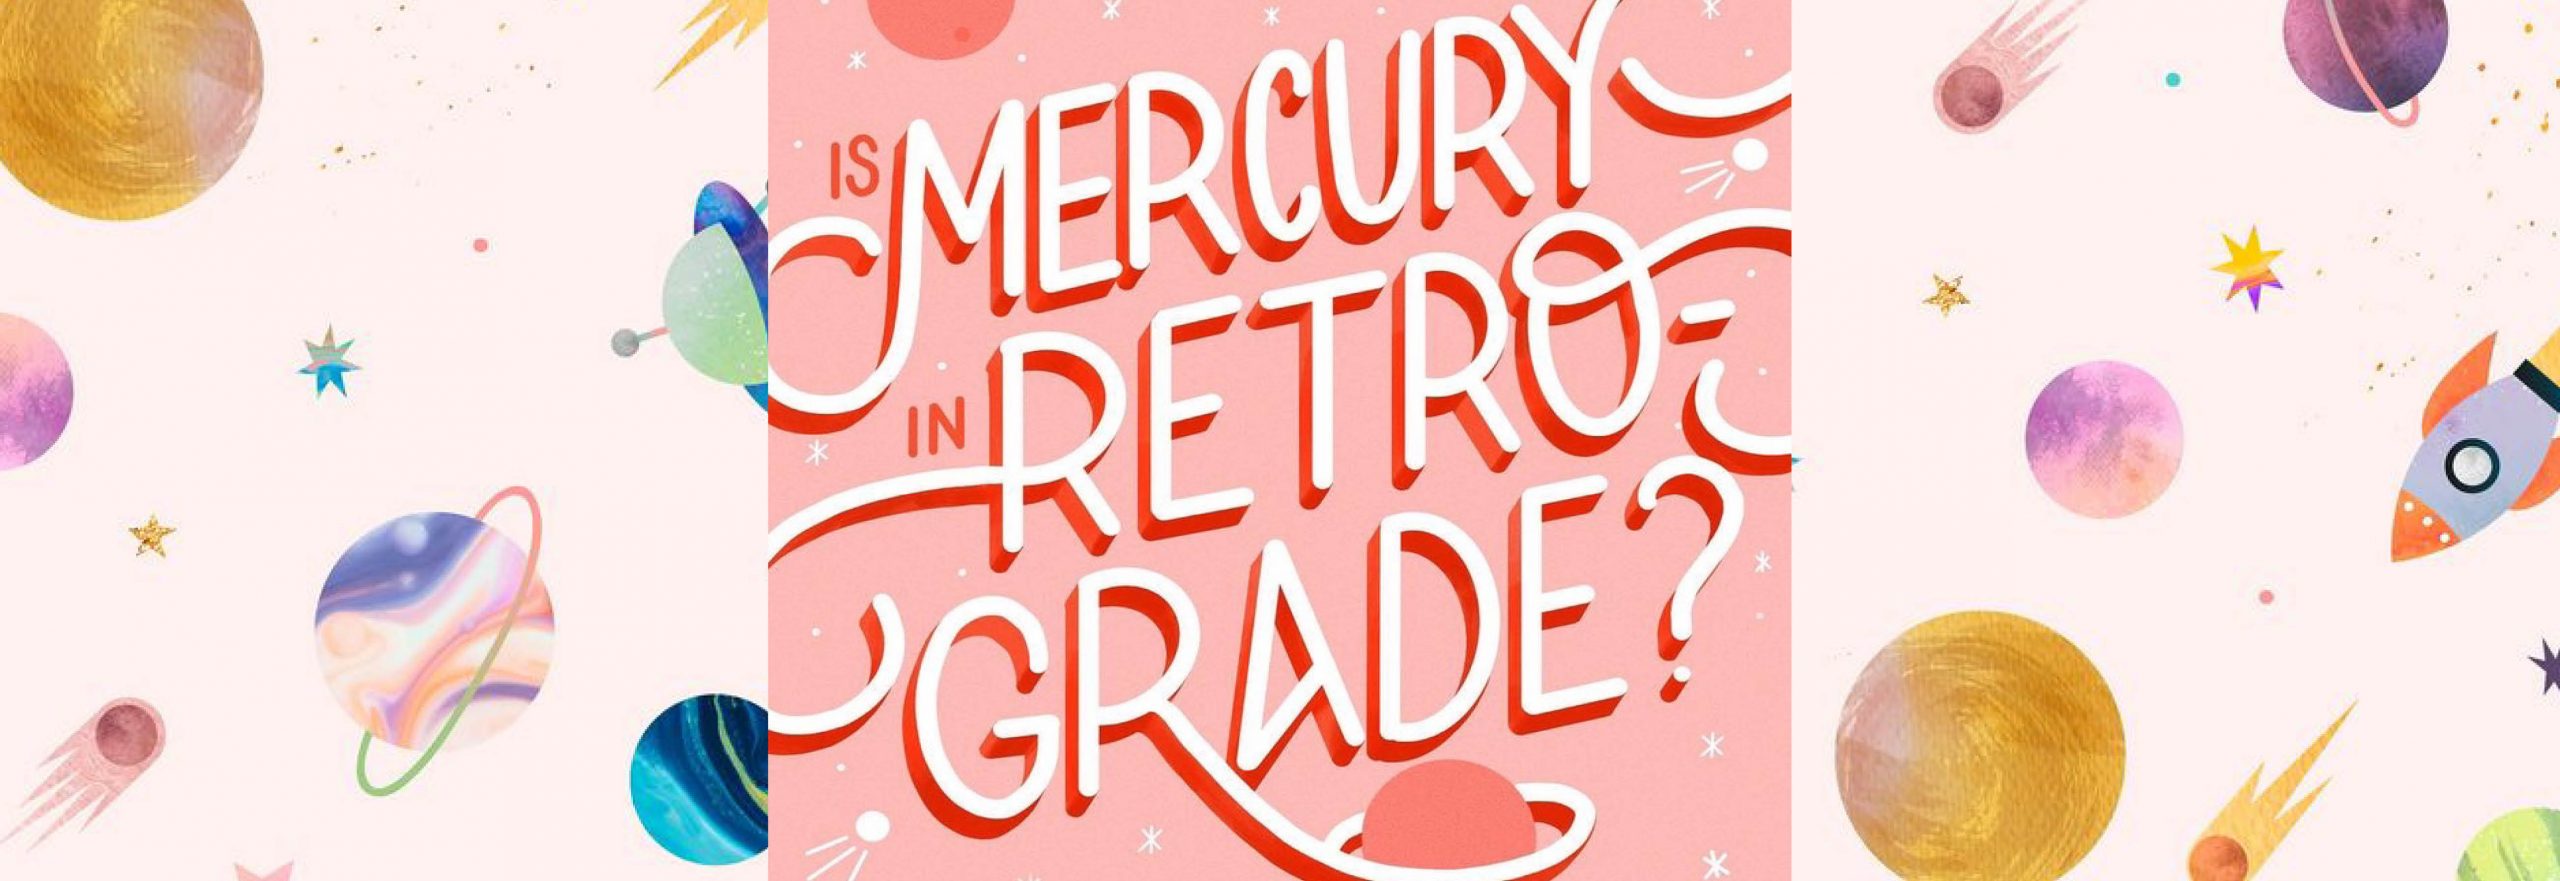 mercury-retrograde-banner-scaled